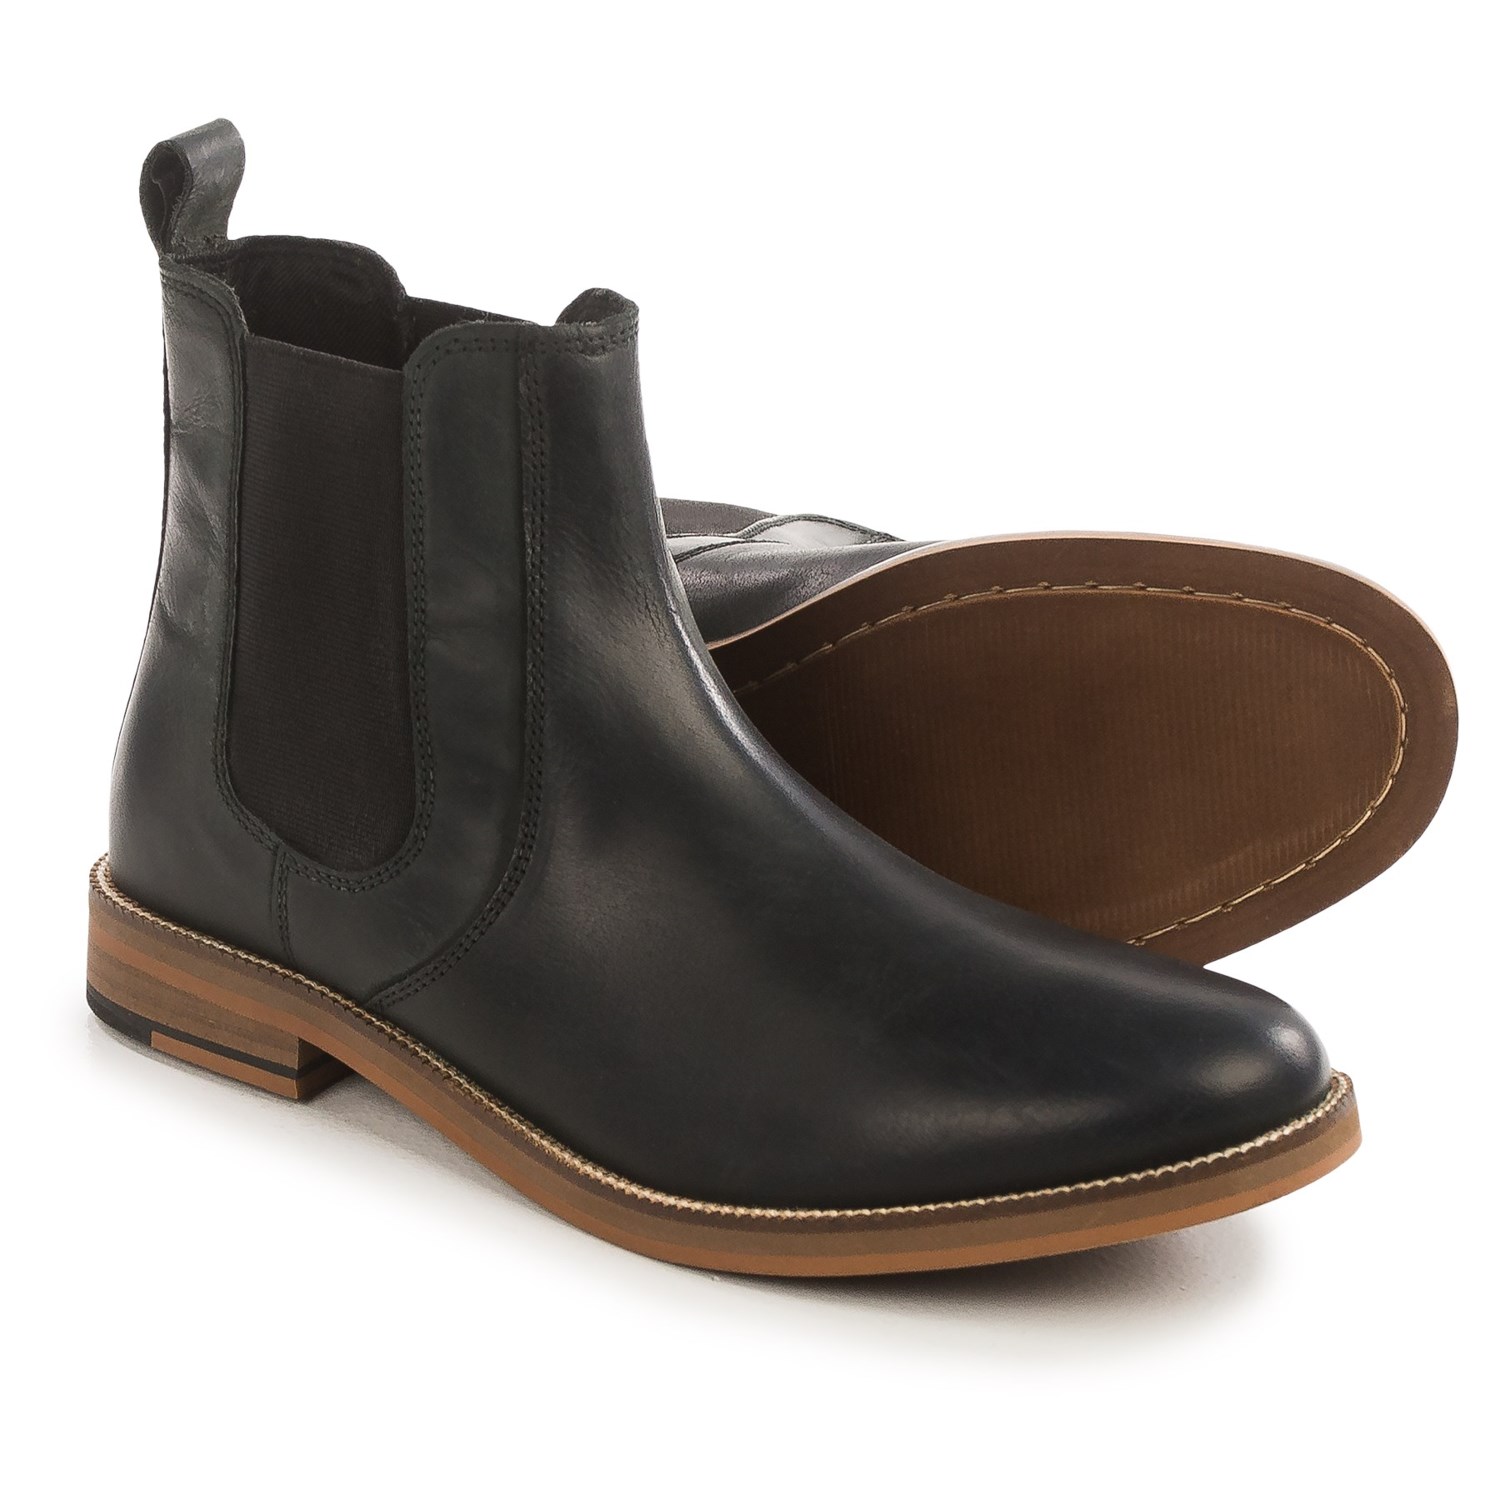 Crevo Denham Boots (For Men) - Save 53%